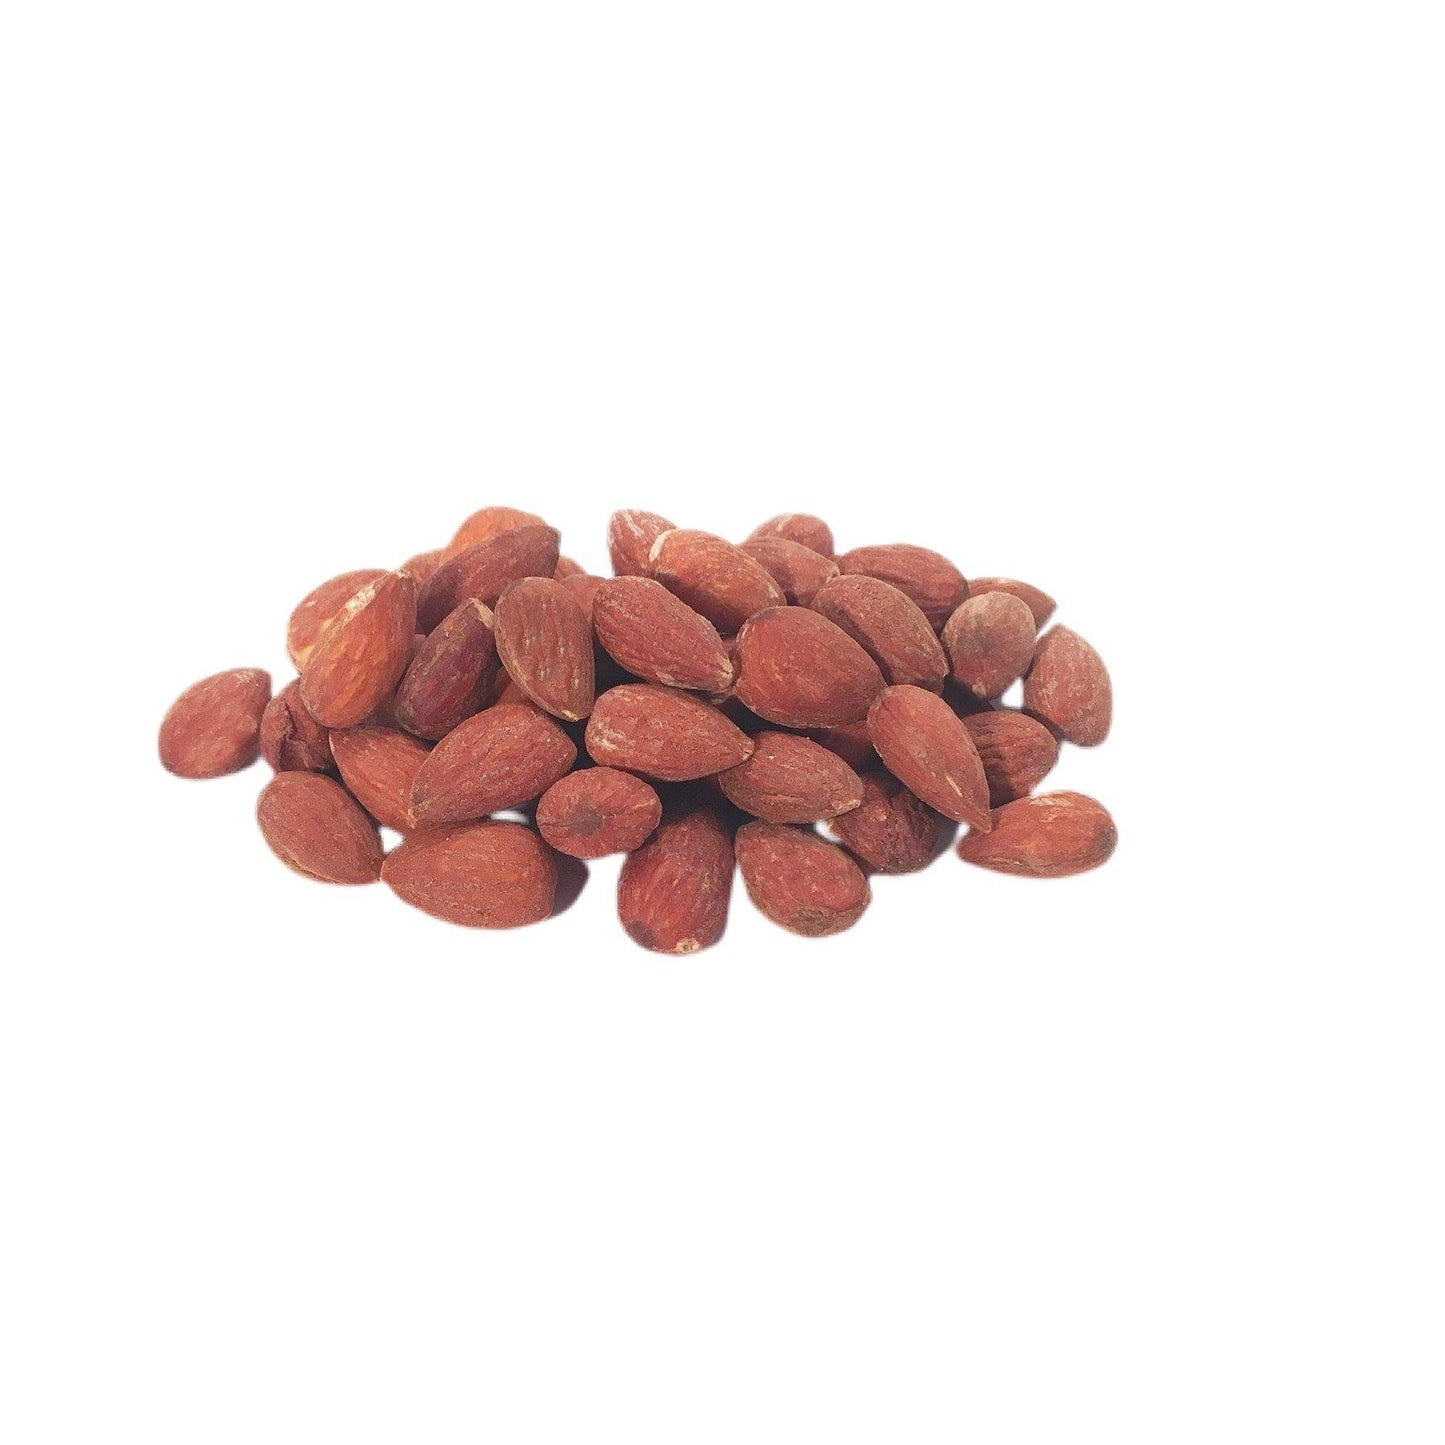 Salted Almonds - The Dormen Food Company